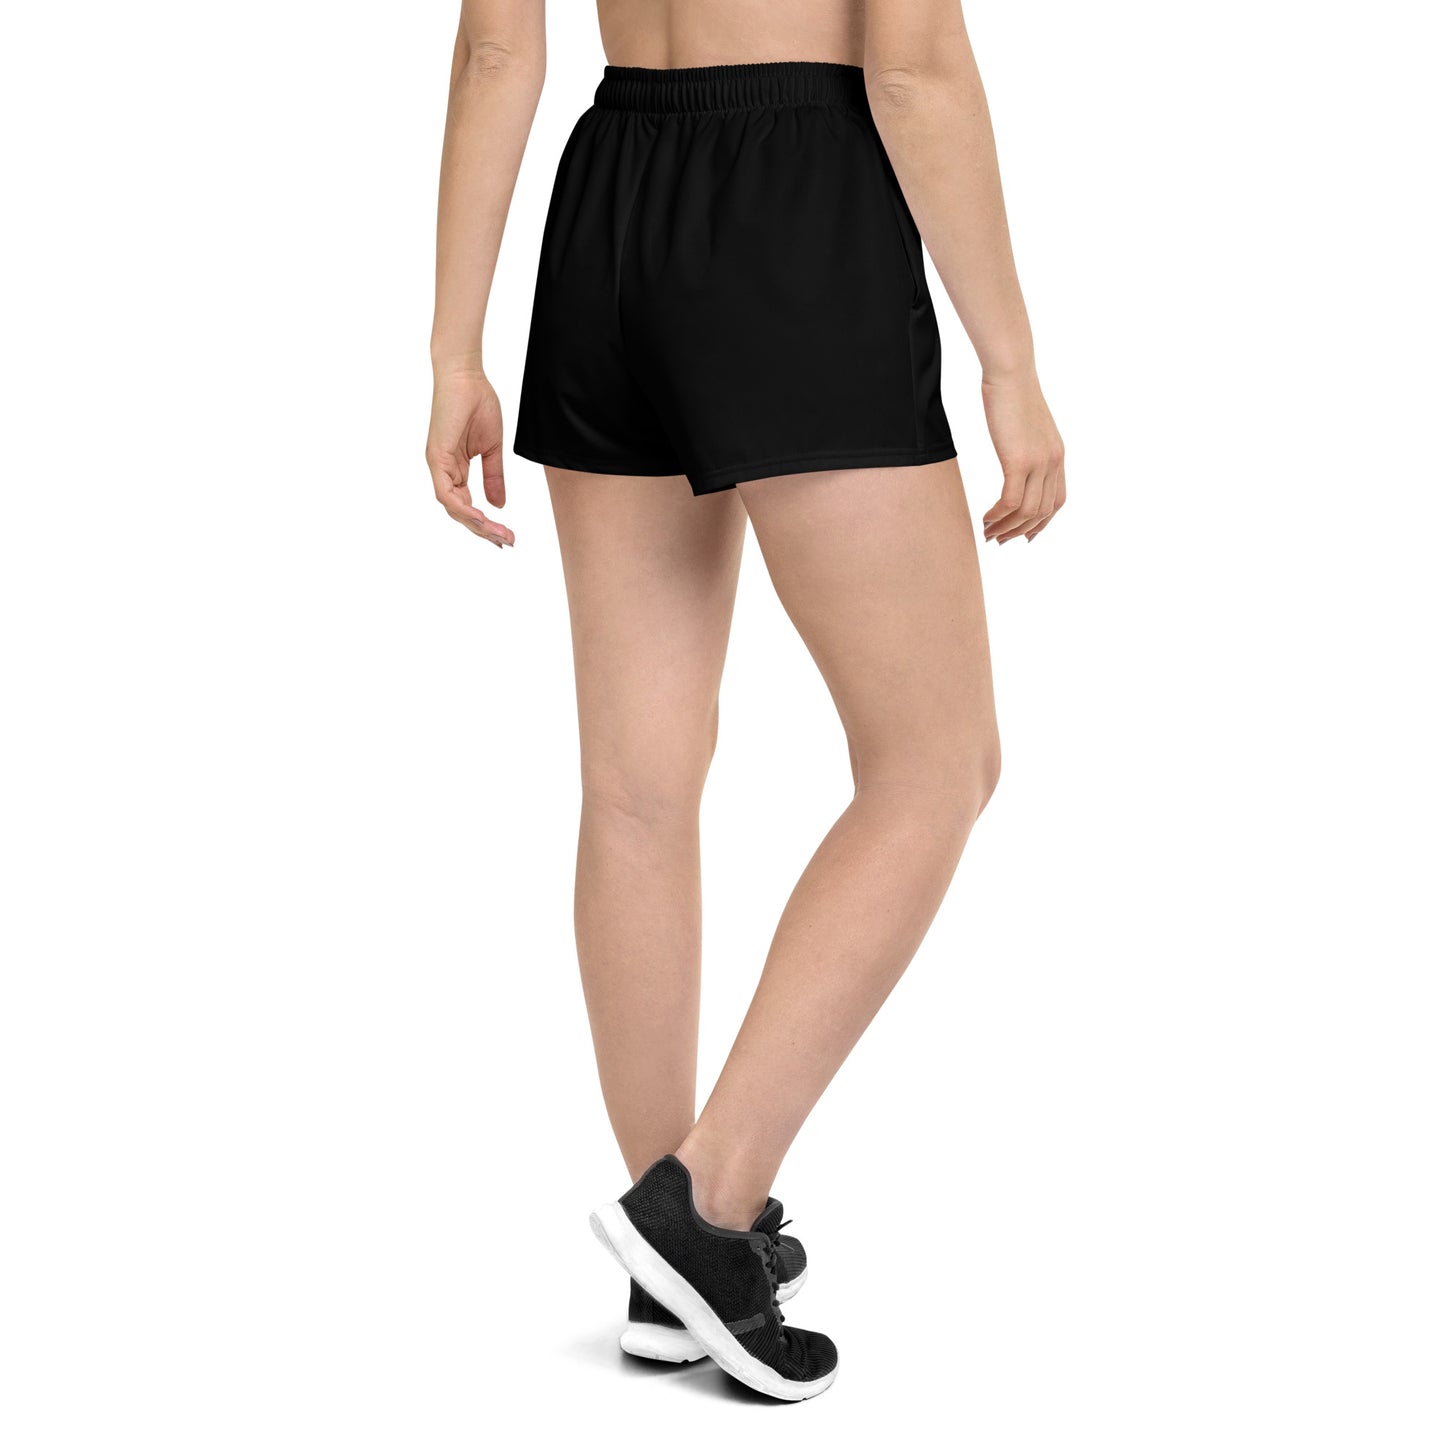 Women's Physical Training Shorts